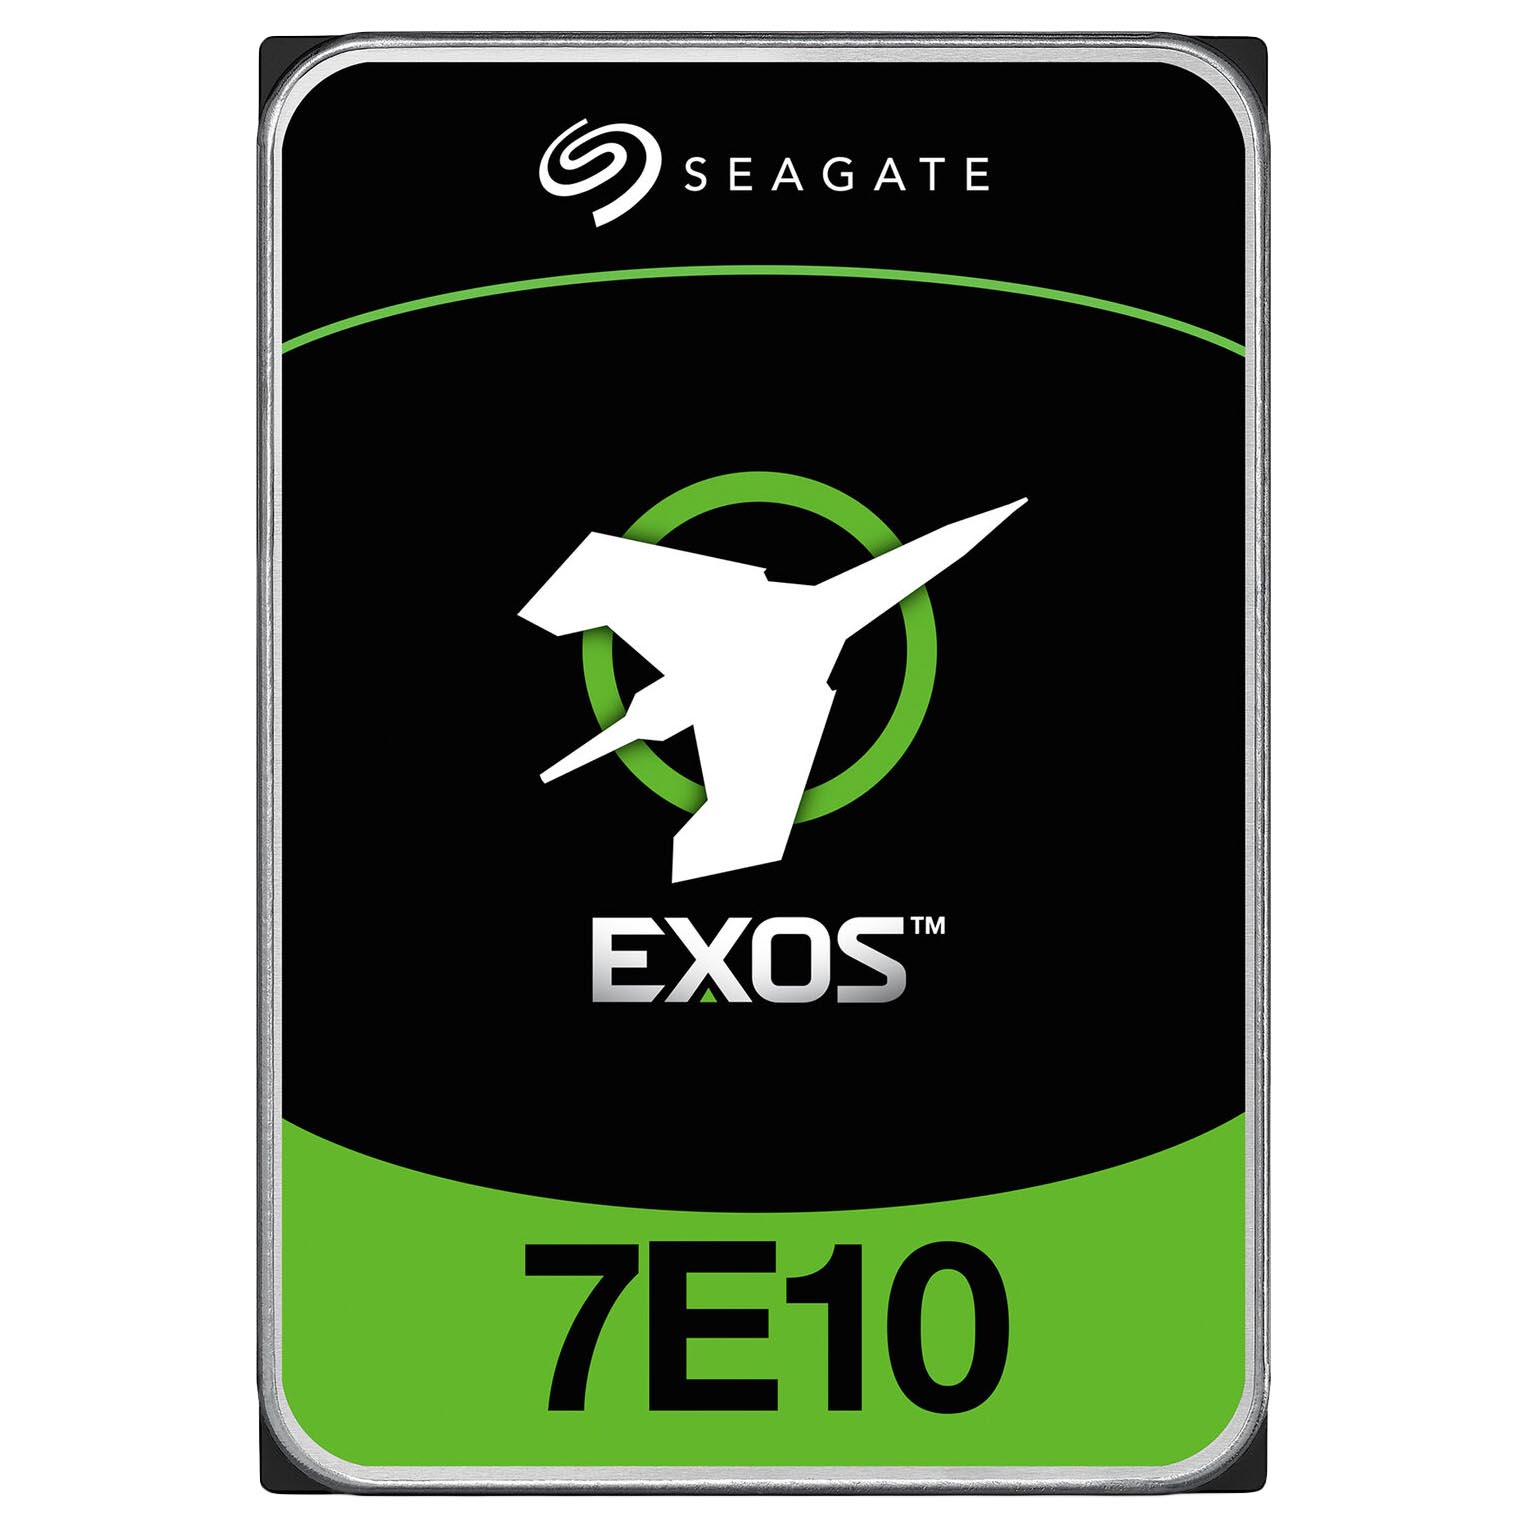 Внутренний жесткий диск Seagate Exos 7E10, ST8000NM017B, 8 Тб жесткий диск seagate exos 7e10 6 тб st6000nm019b